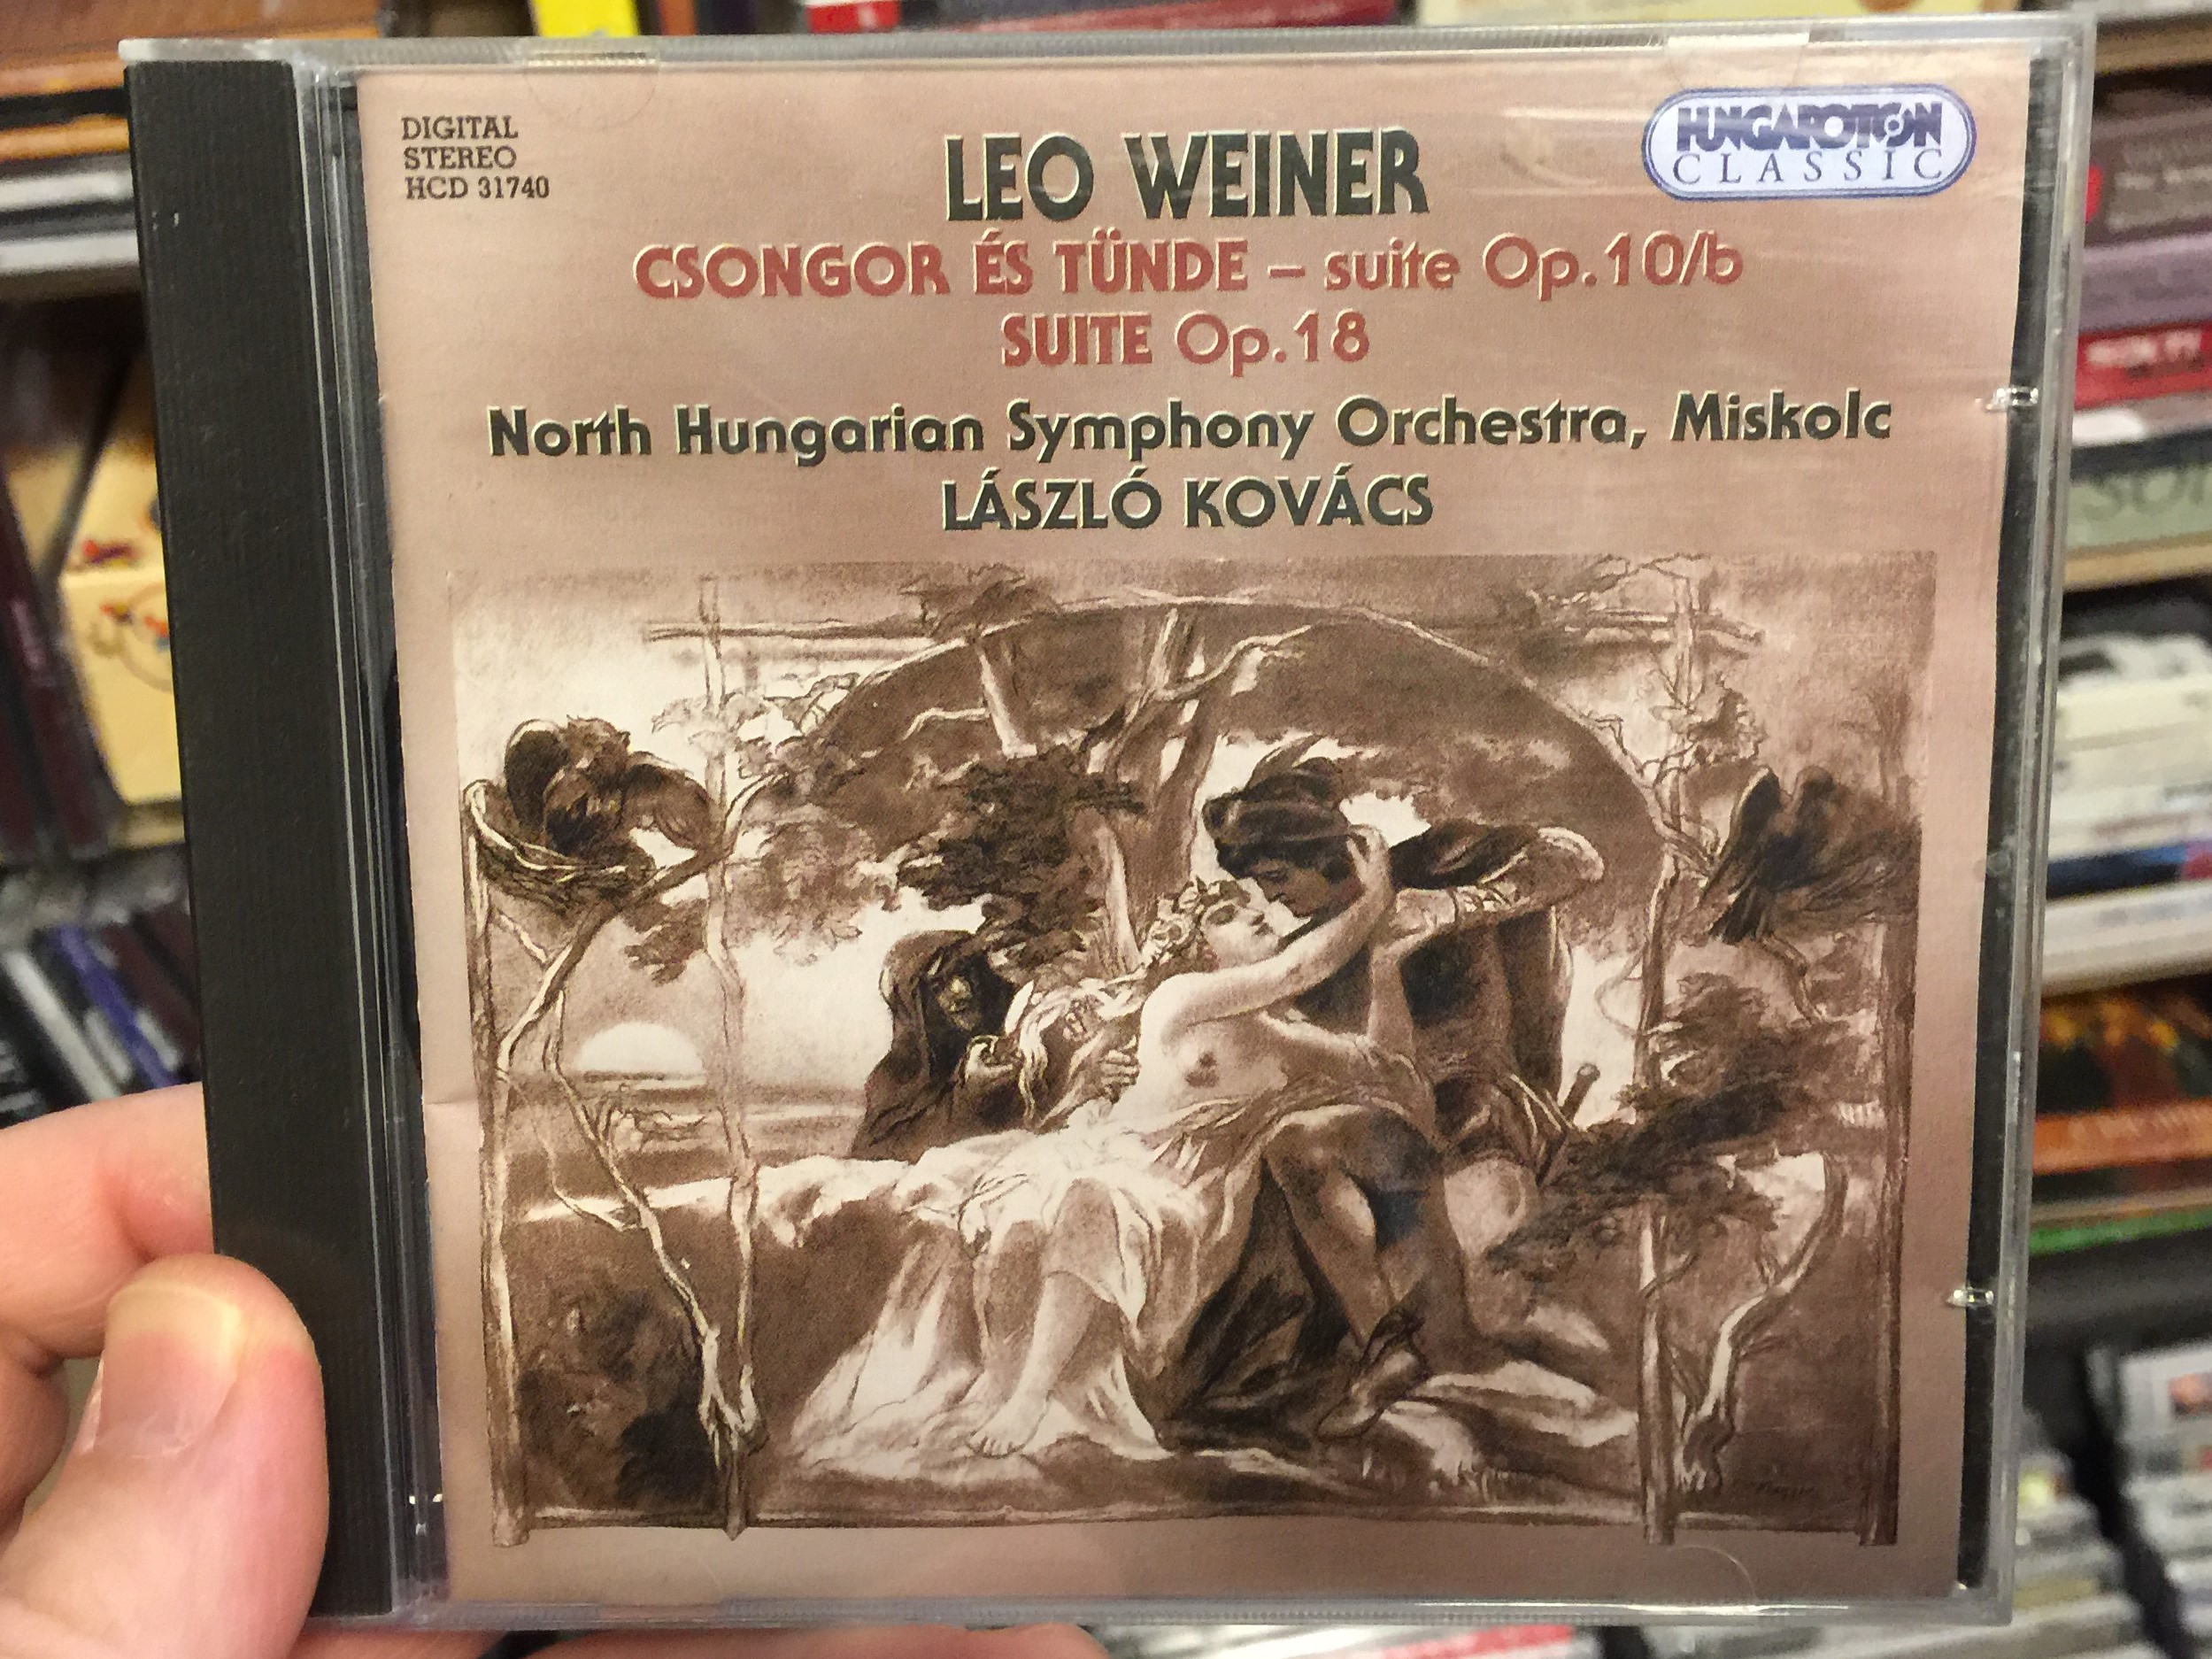 leo-weiner-csongor-es-tunde-suite-op.-10b-suite-op.-18-north-hungarian-symphony-orchestra-miskolc-laszlo-kovacs-hungaroton-classic-audio-cd-1997-stereo-hcd-31740-1-.jpg